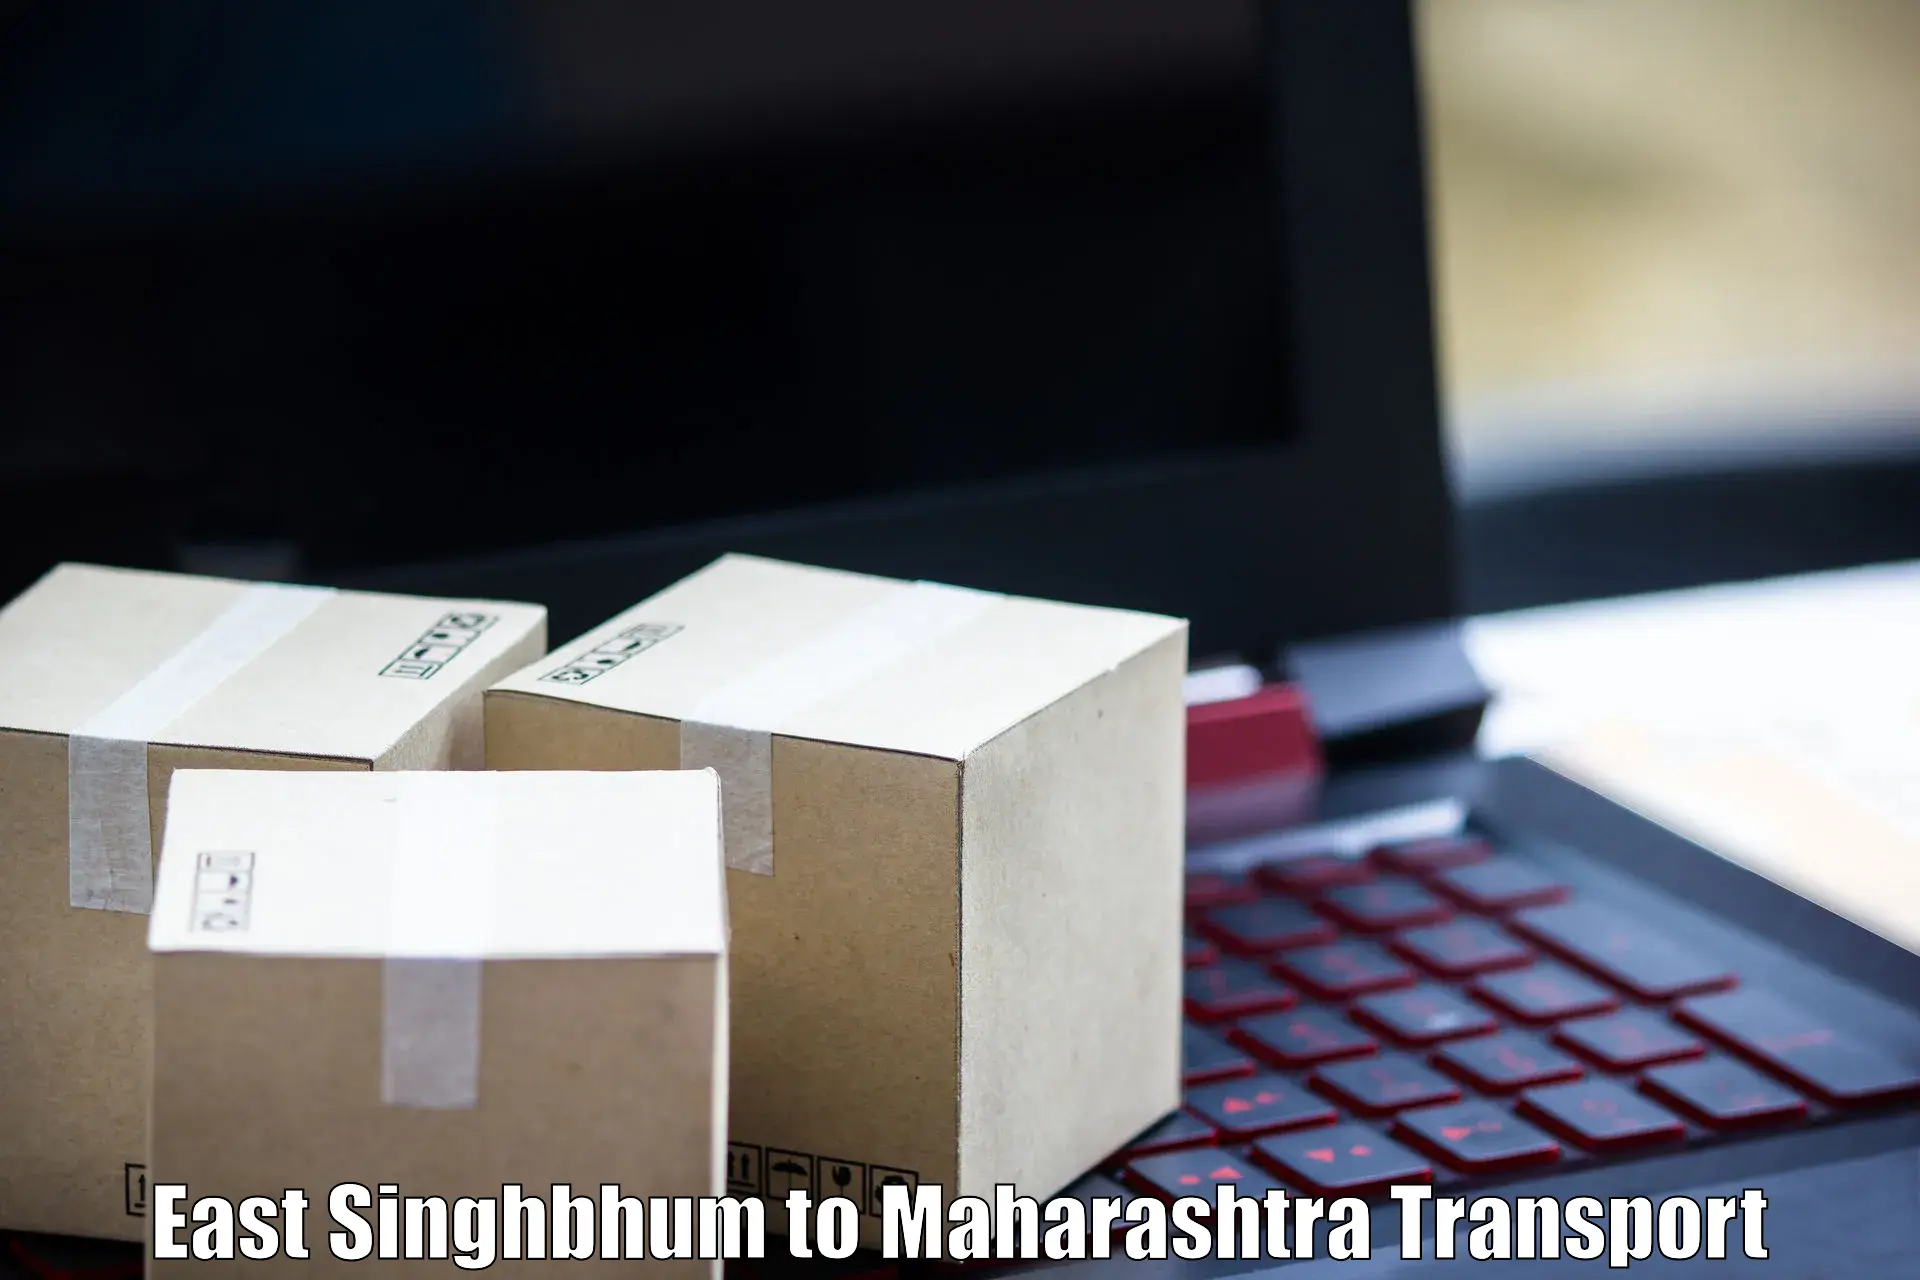 Delivery service East Singhbhum to Jawaharlal Nehru Port Nhava Sheva